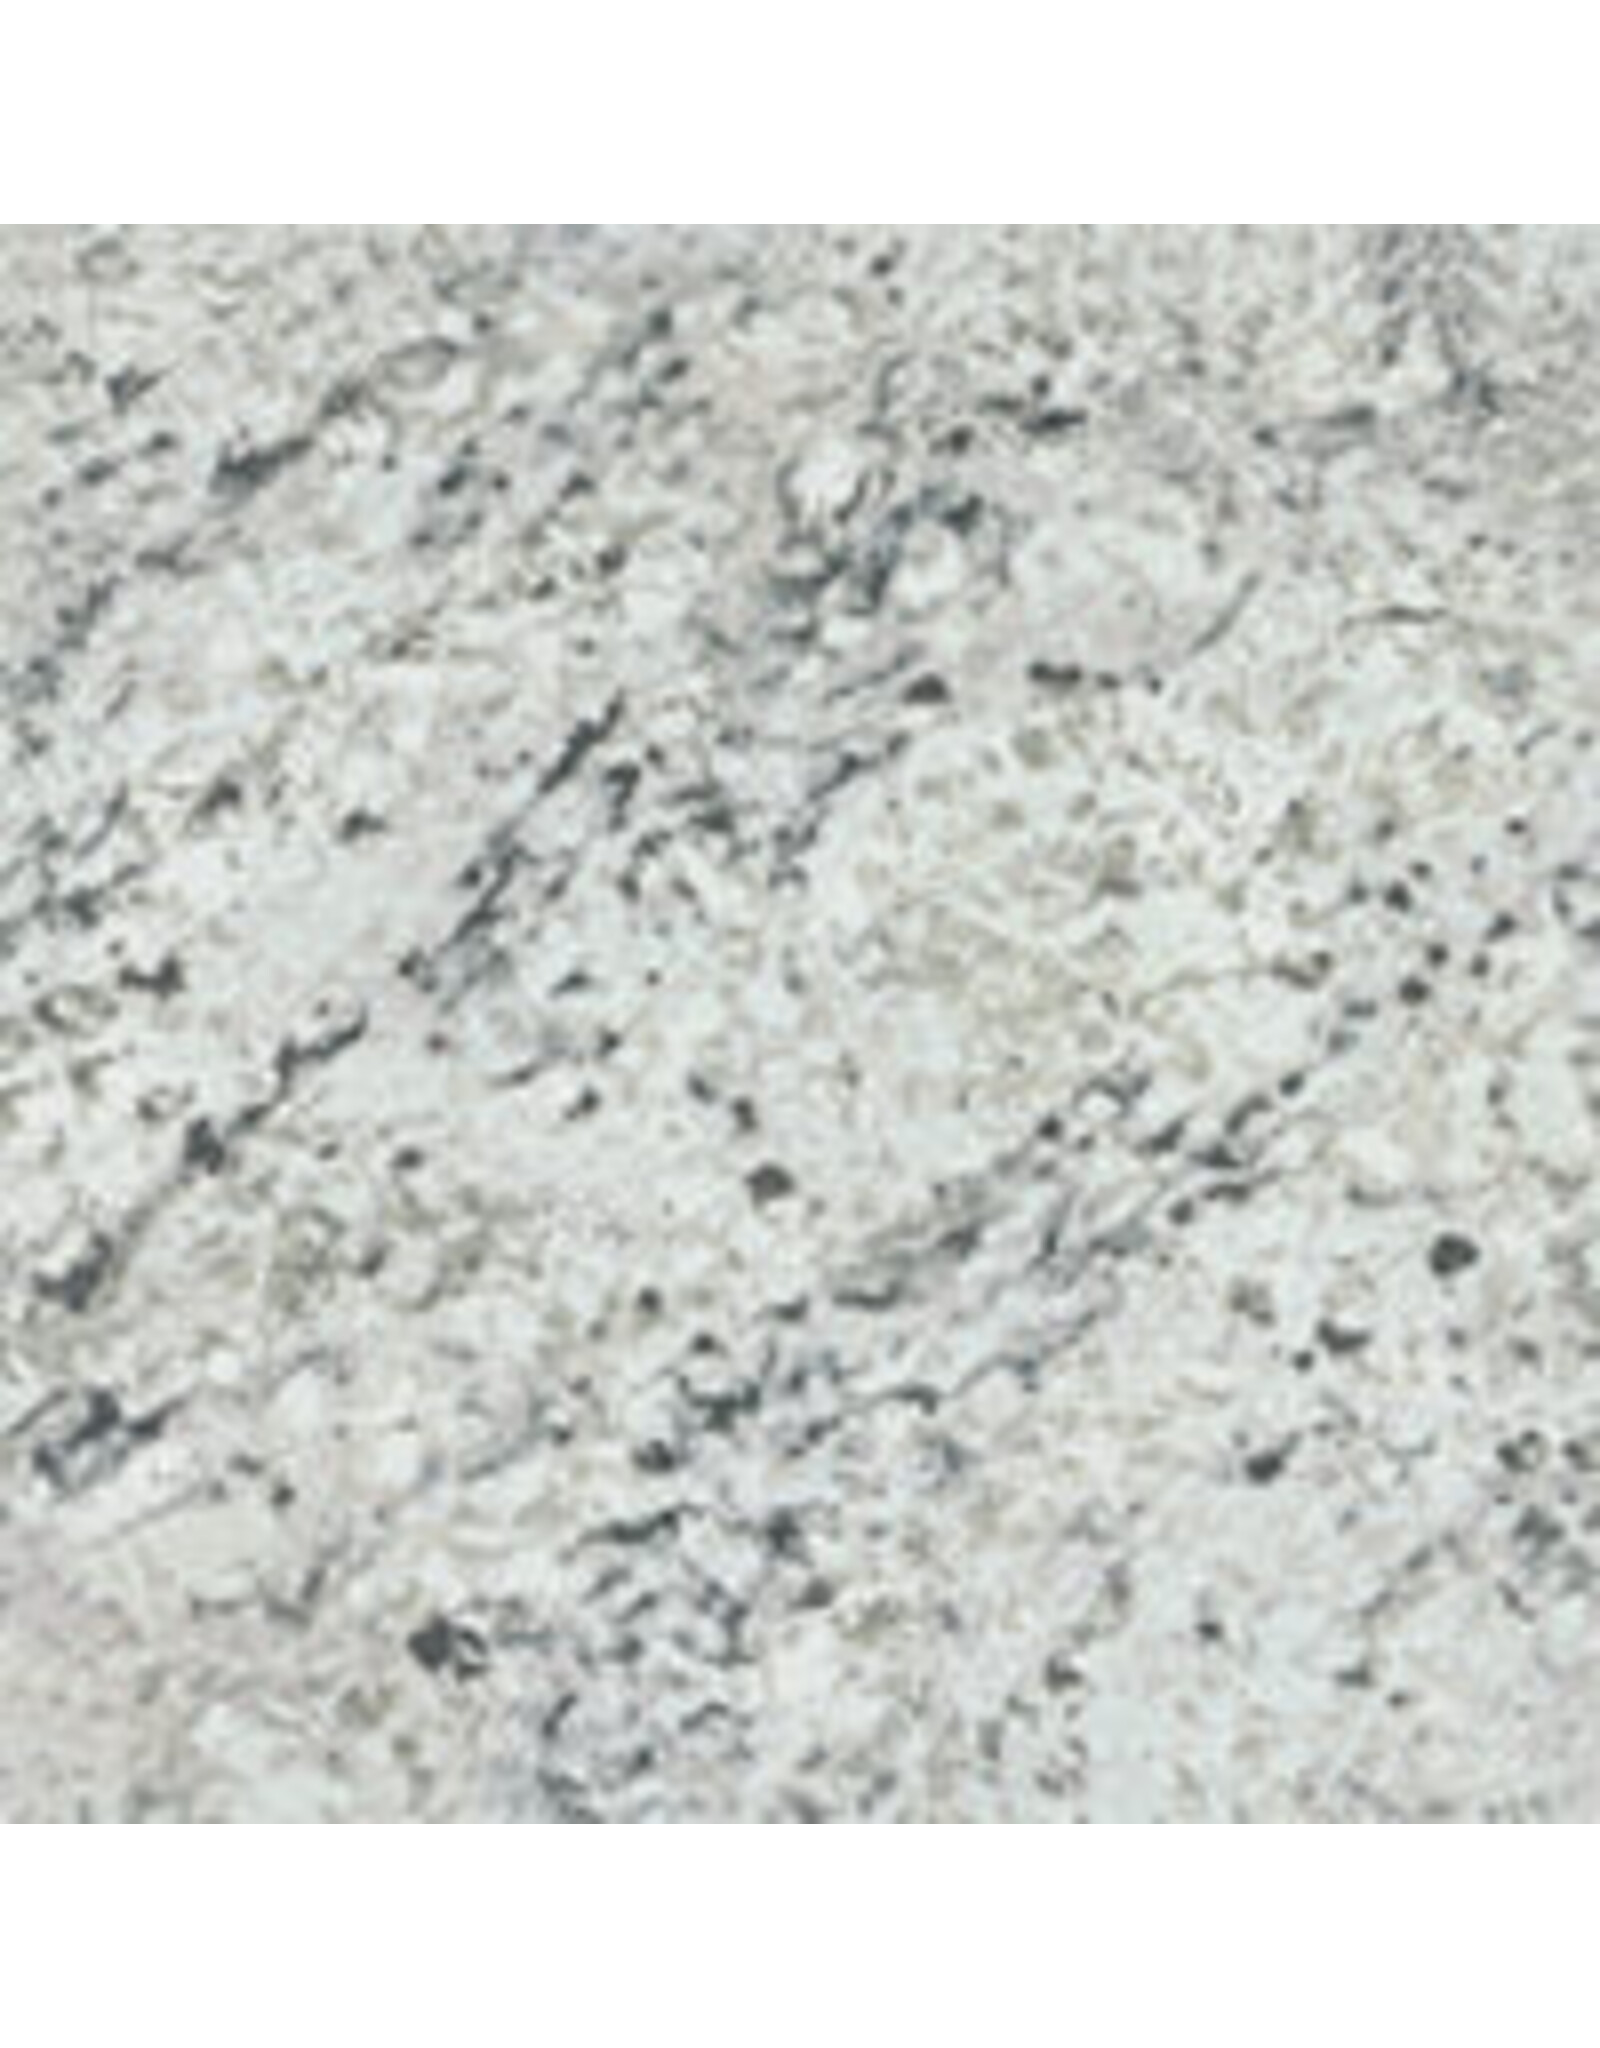 HKC Laminate Countertop 9476-43 White Ice Granite 25.25x96 Left Miter (8ft)